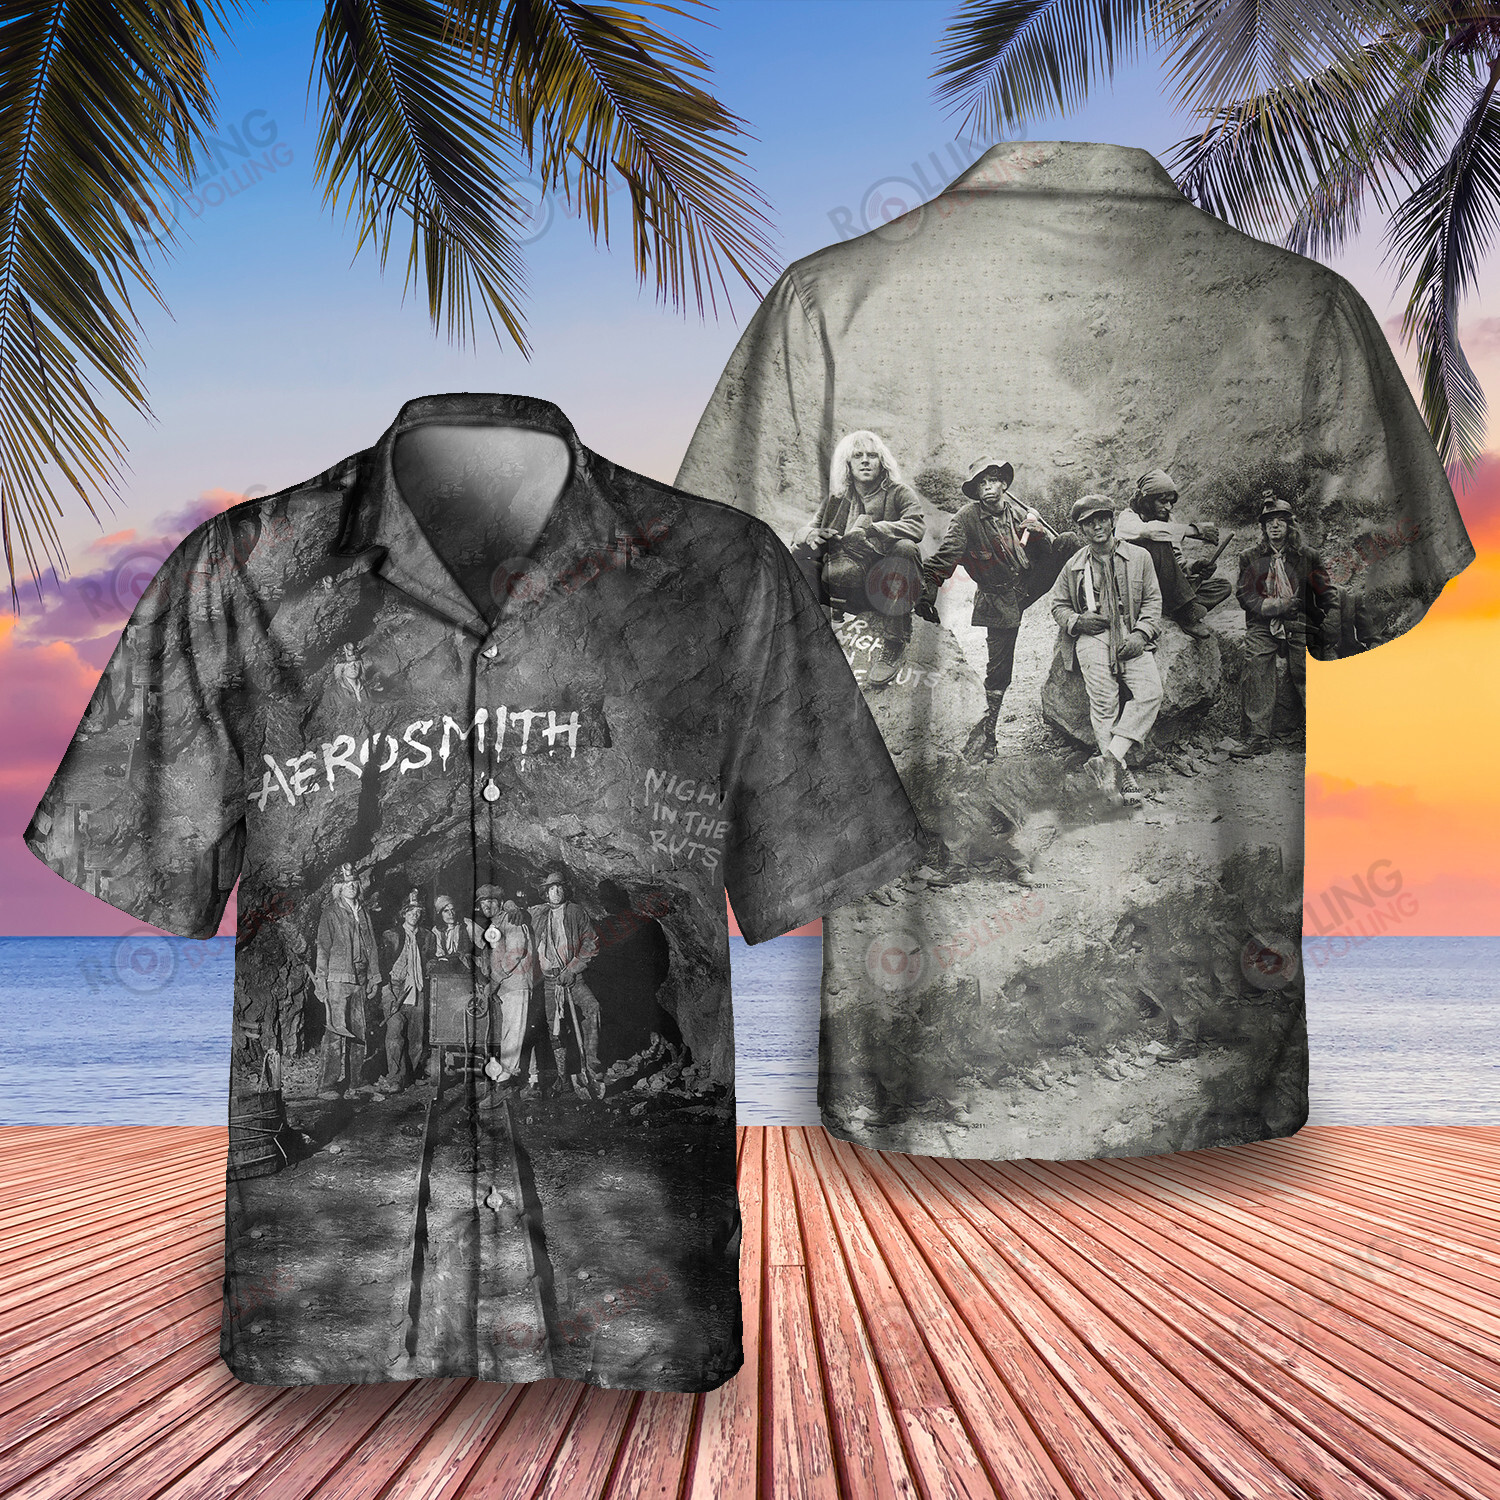 Regardless of their style, you will feel comfortable wearing Hawaiian Shirt 82